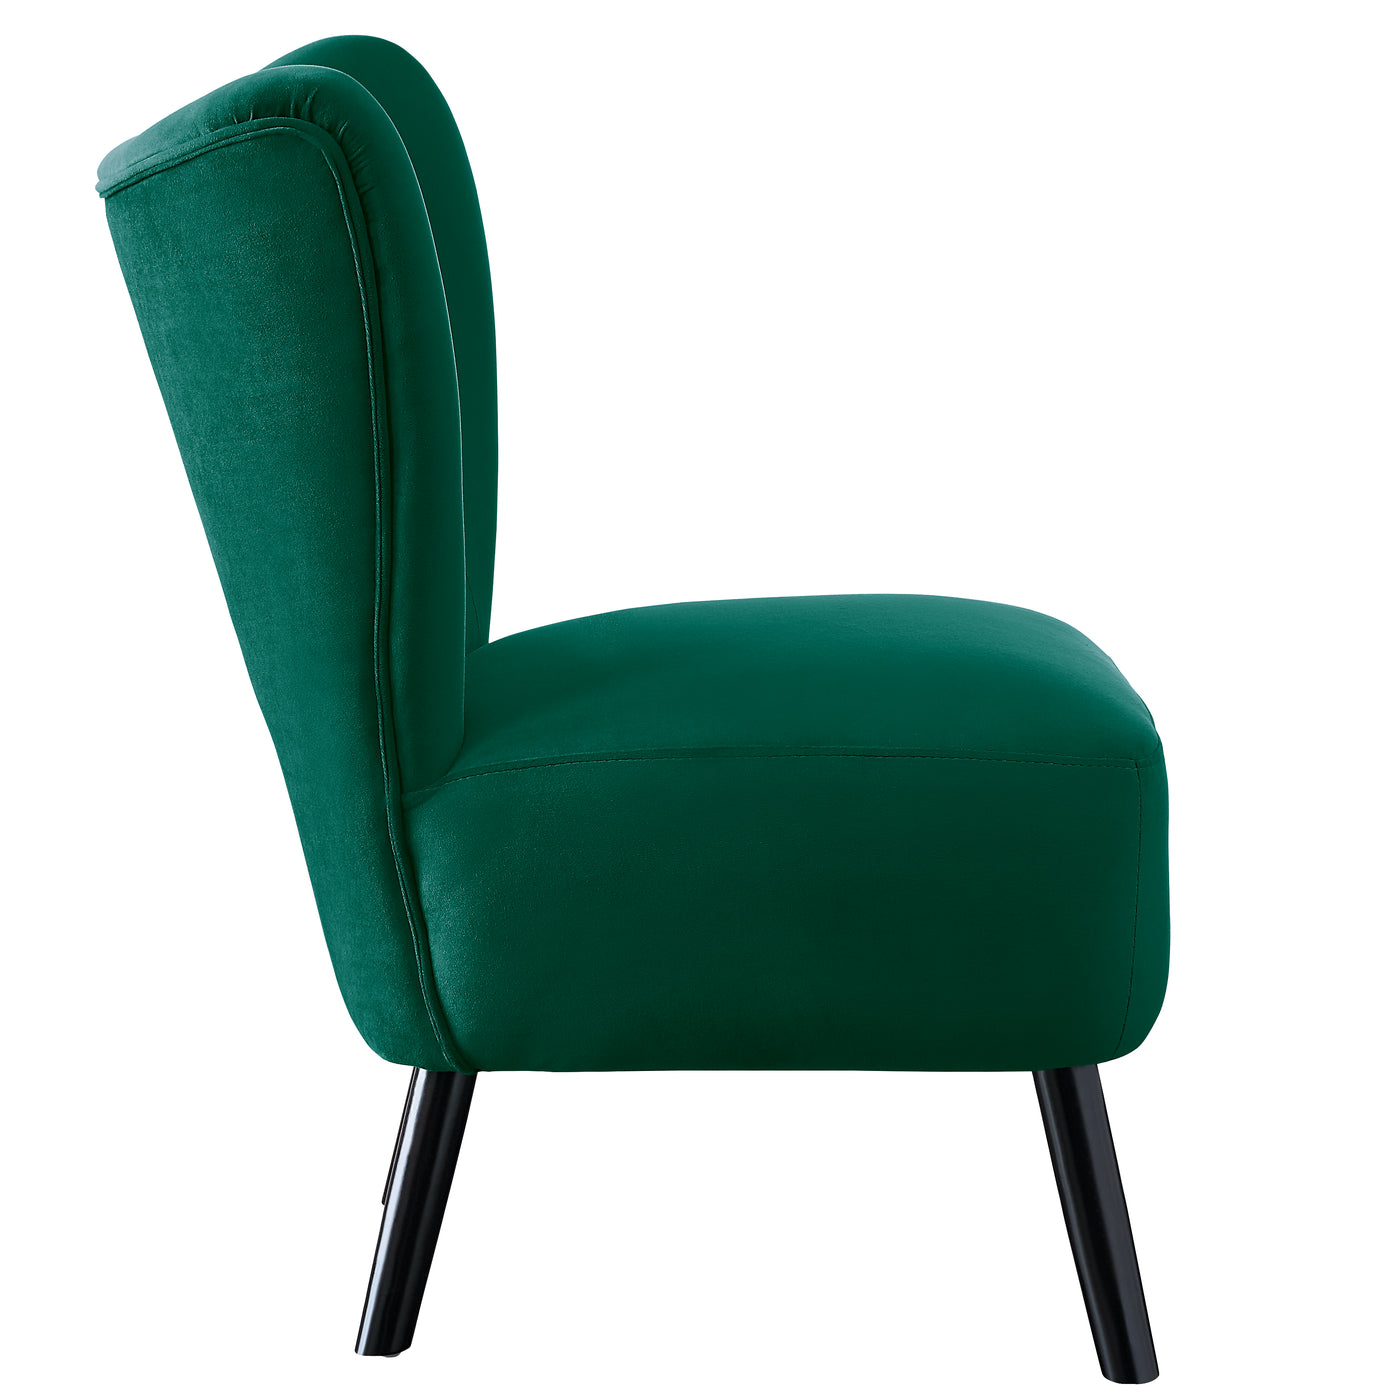 Mimi Accent Chair - Green Velvet